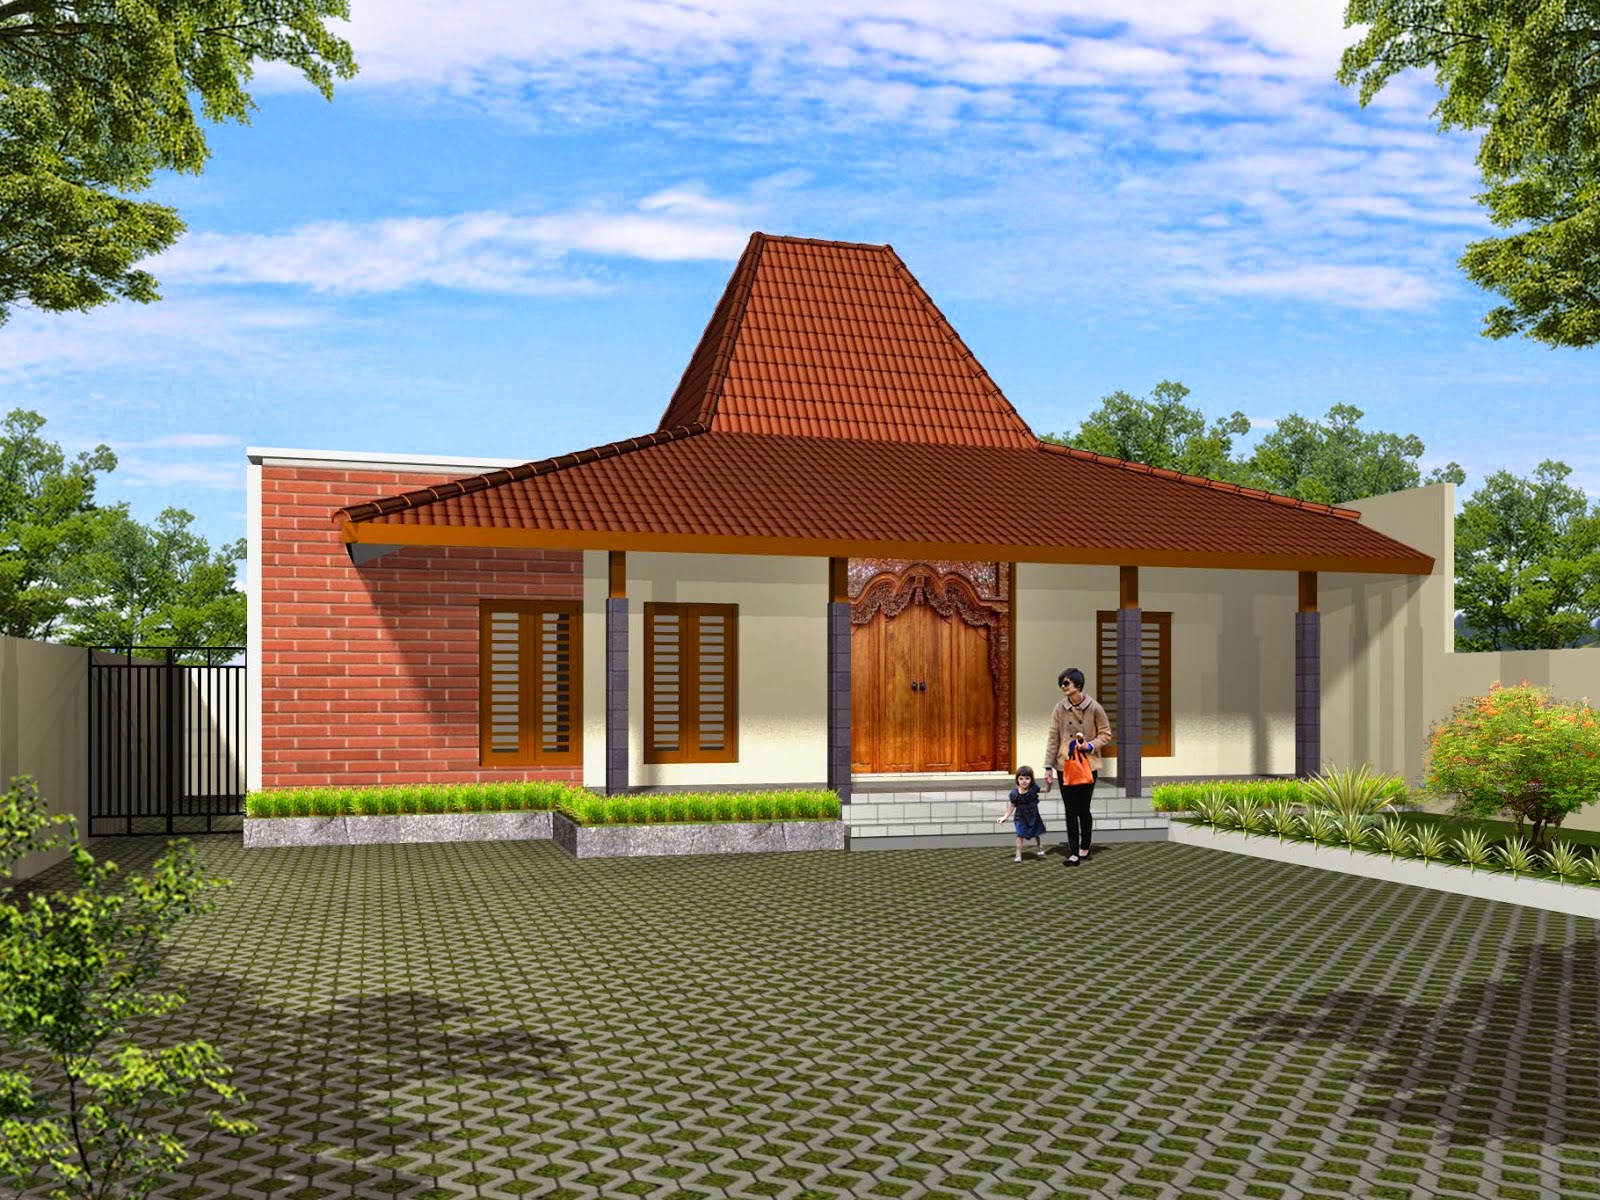 45 Desain Rumah Joglo Khas Jawa Tengah  Desainrumahnya.com